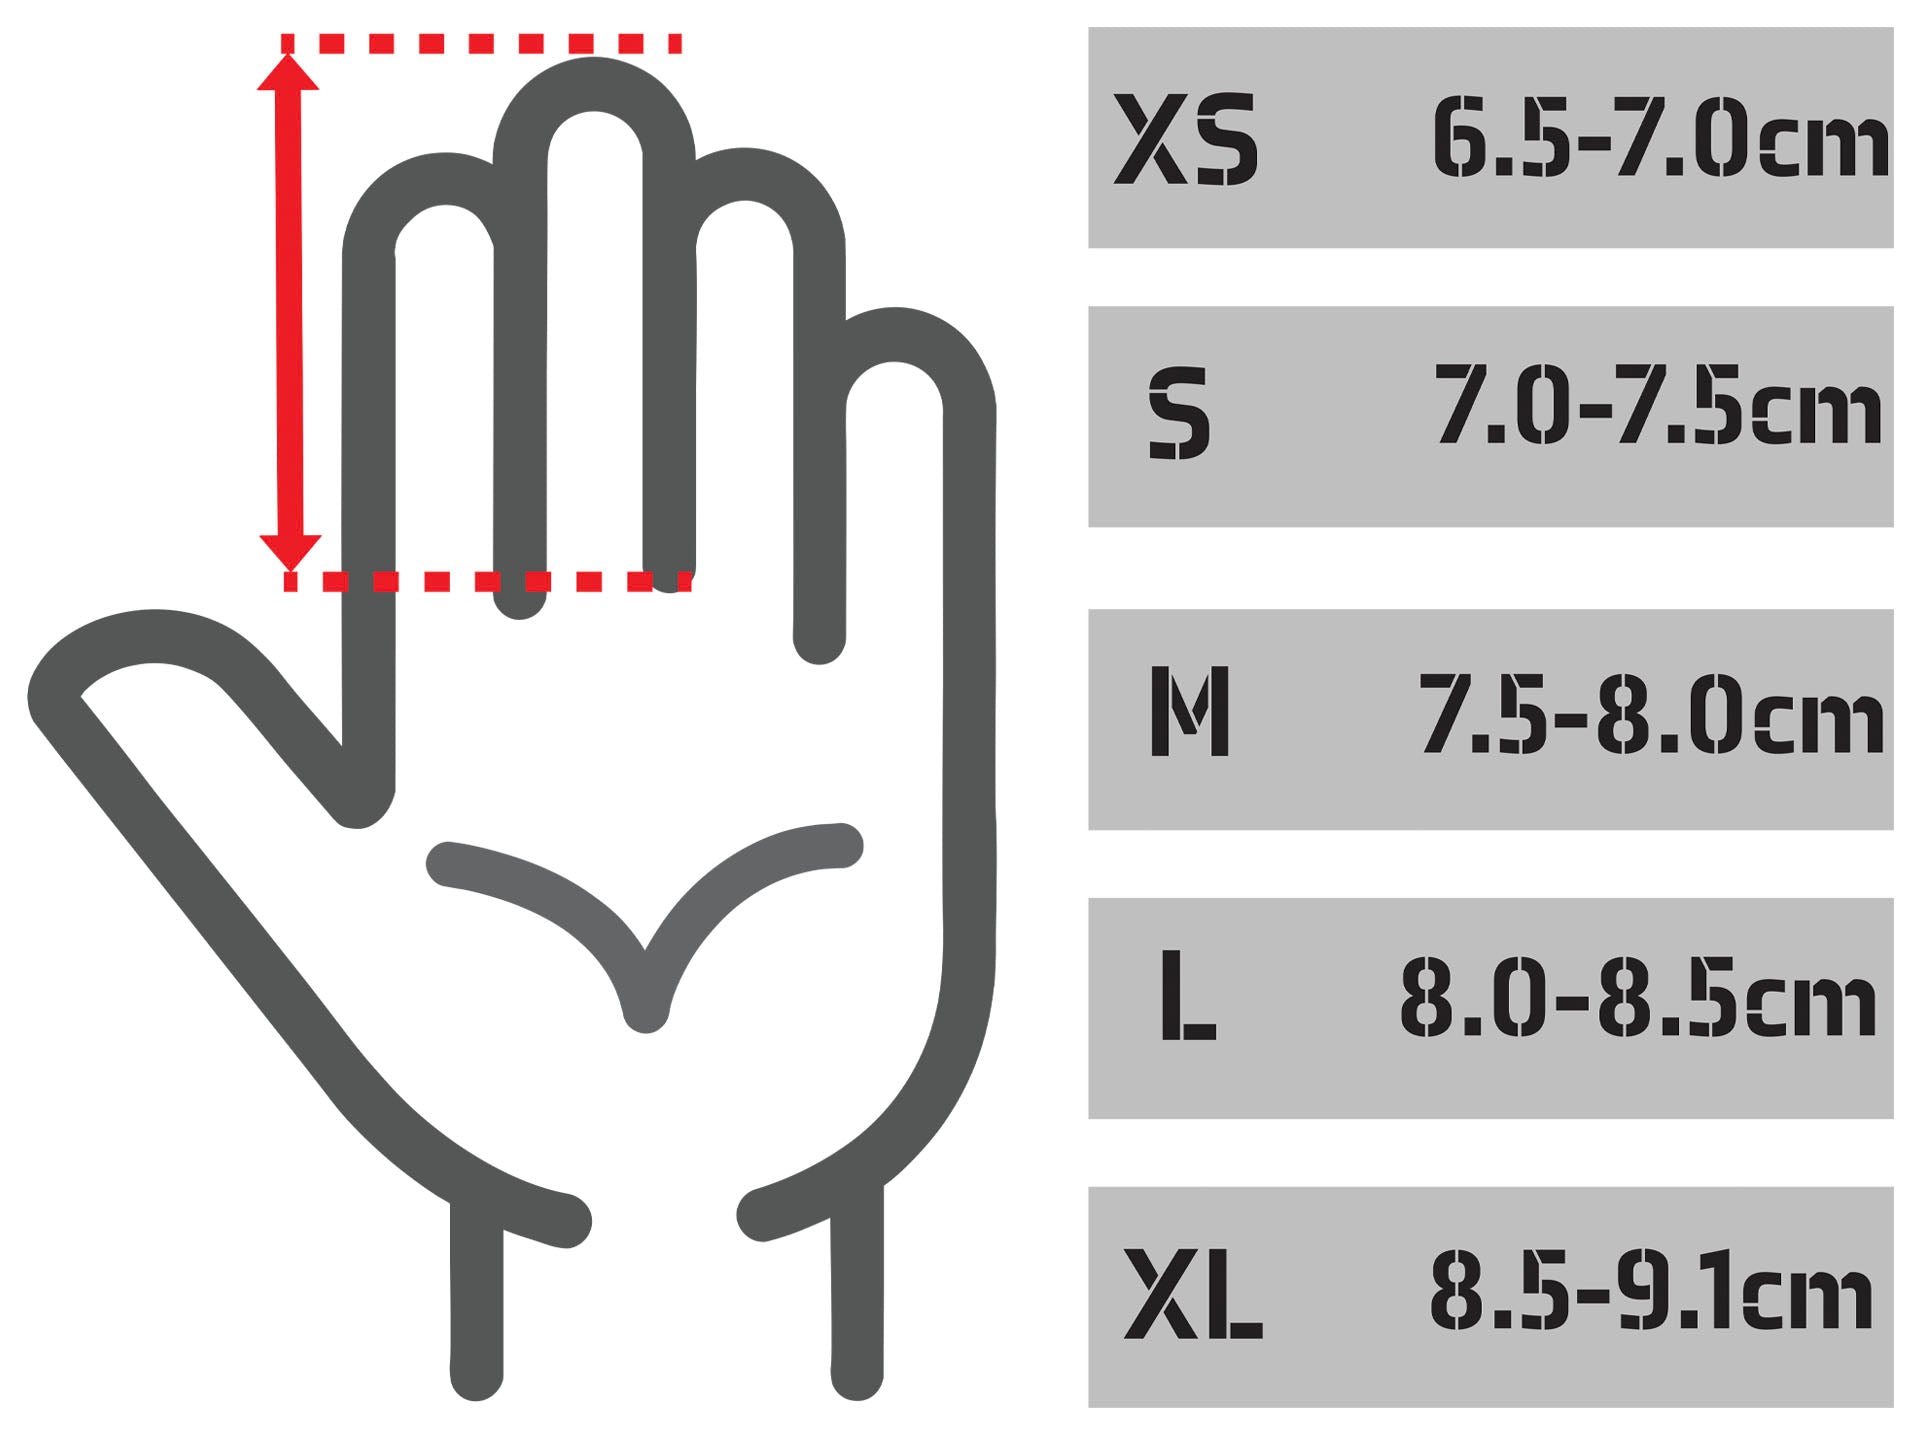 Mens Gloves Size Chart